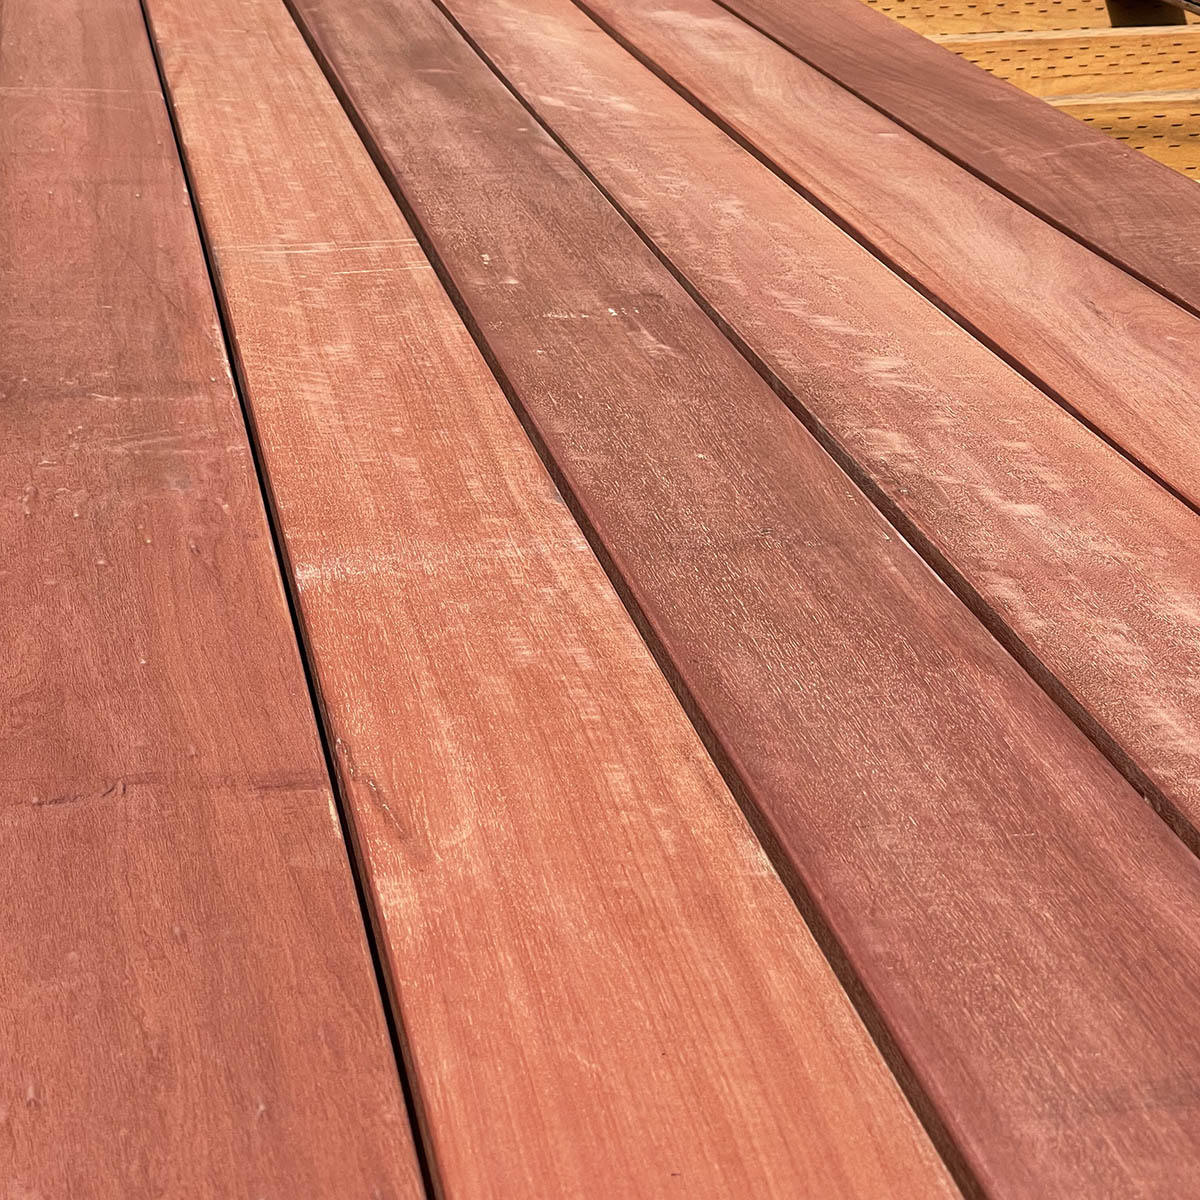 South Pacific Redwood Manilkara 54x6 Deck Boards 3 1200 